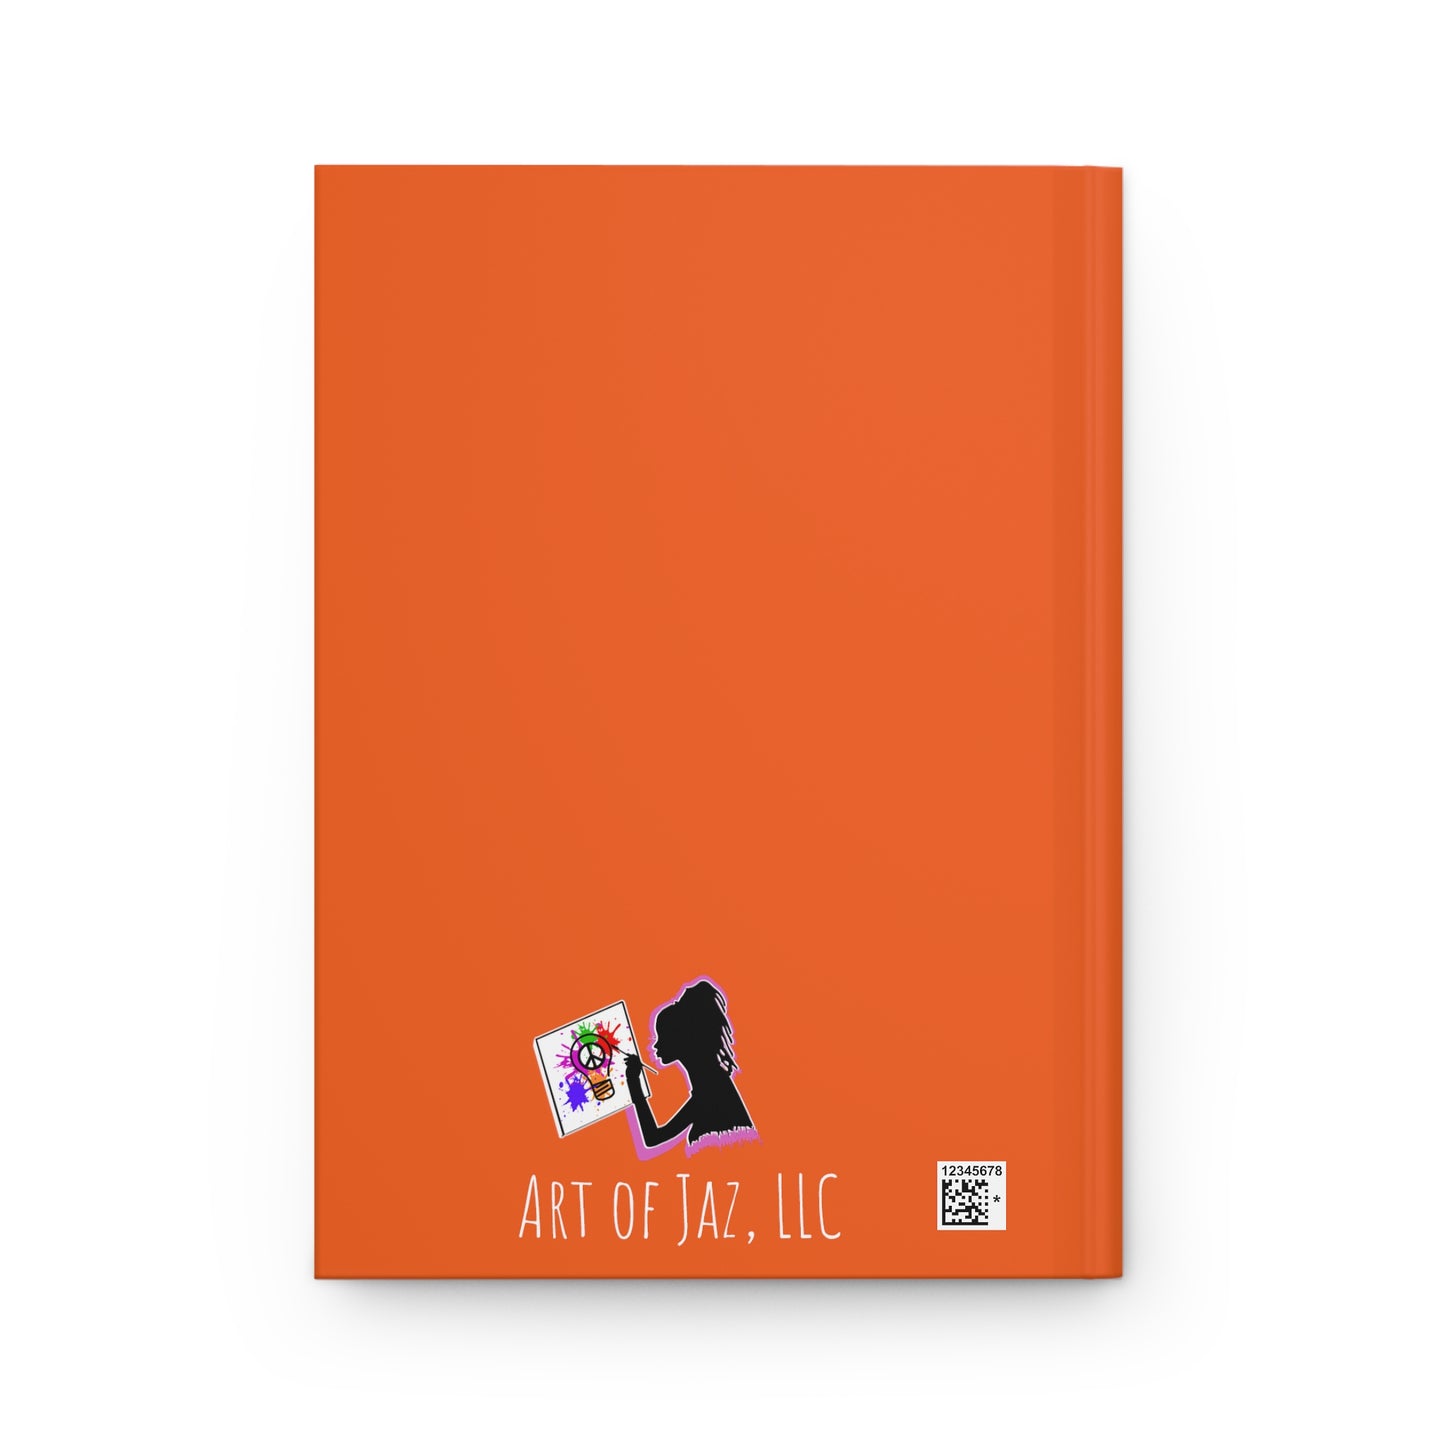 Bold and Beautiful Hardcover Journal (Orange)